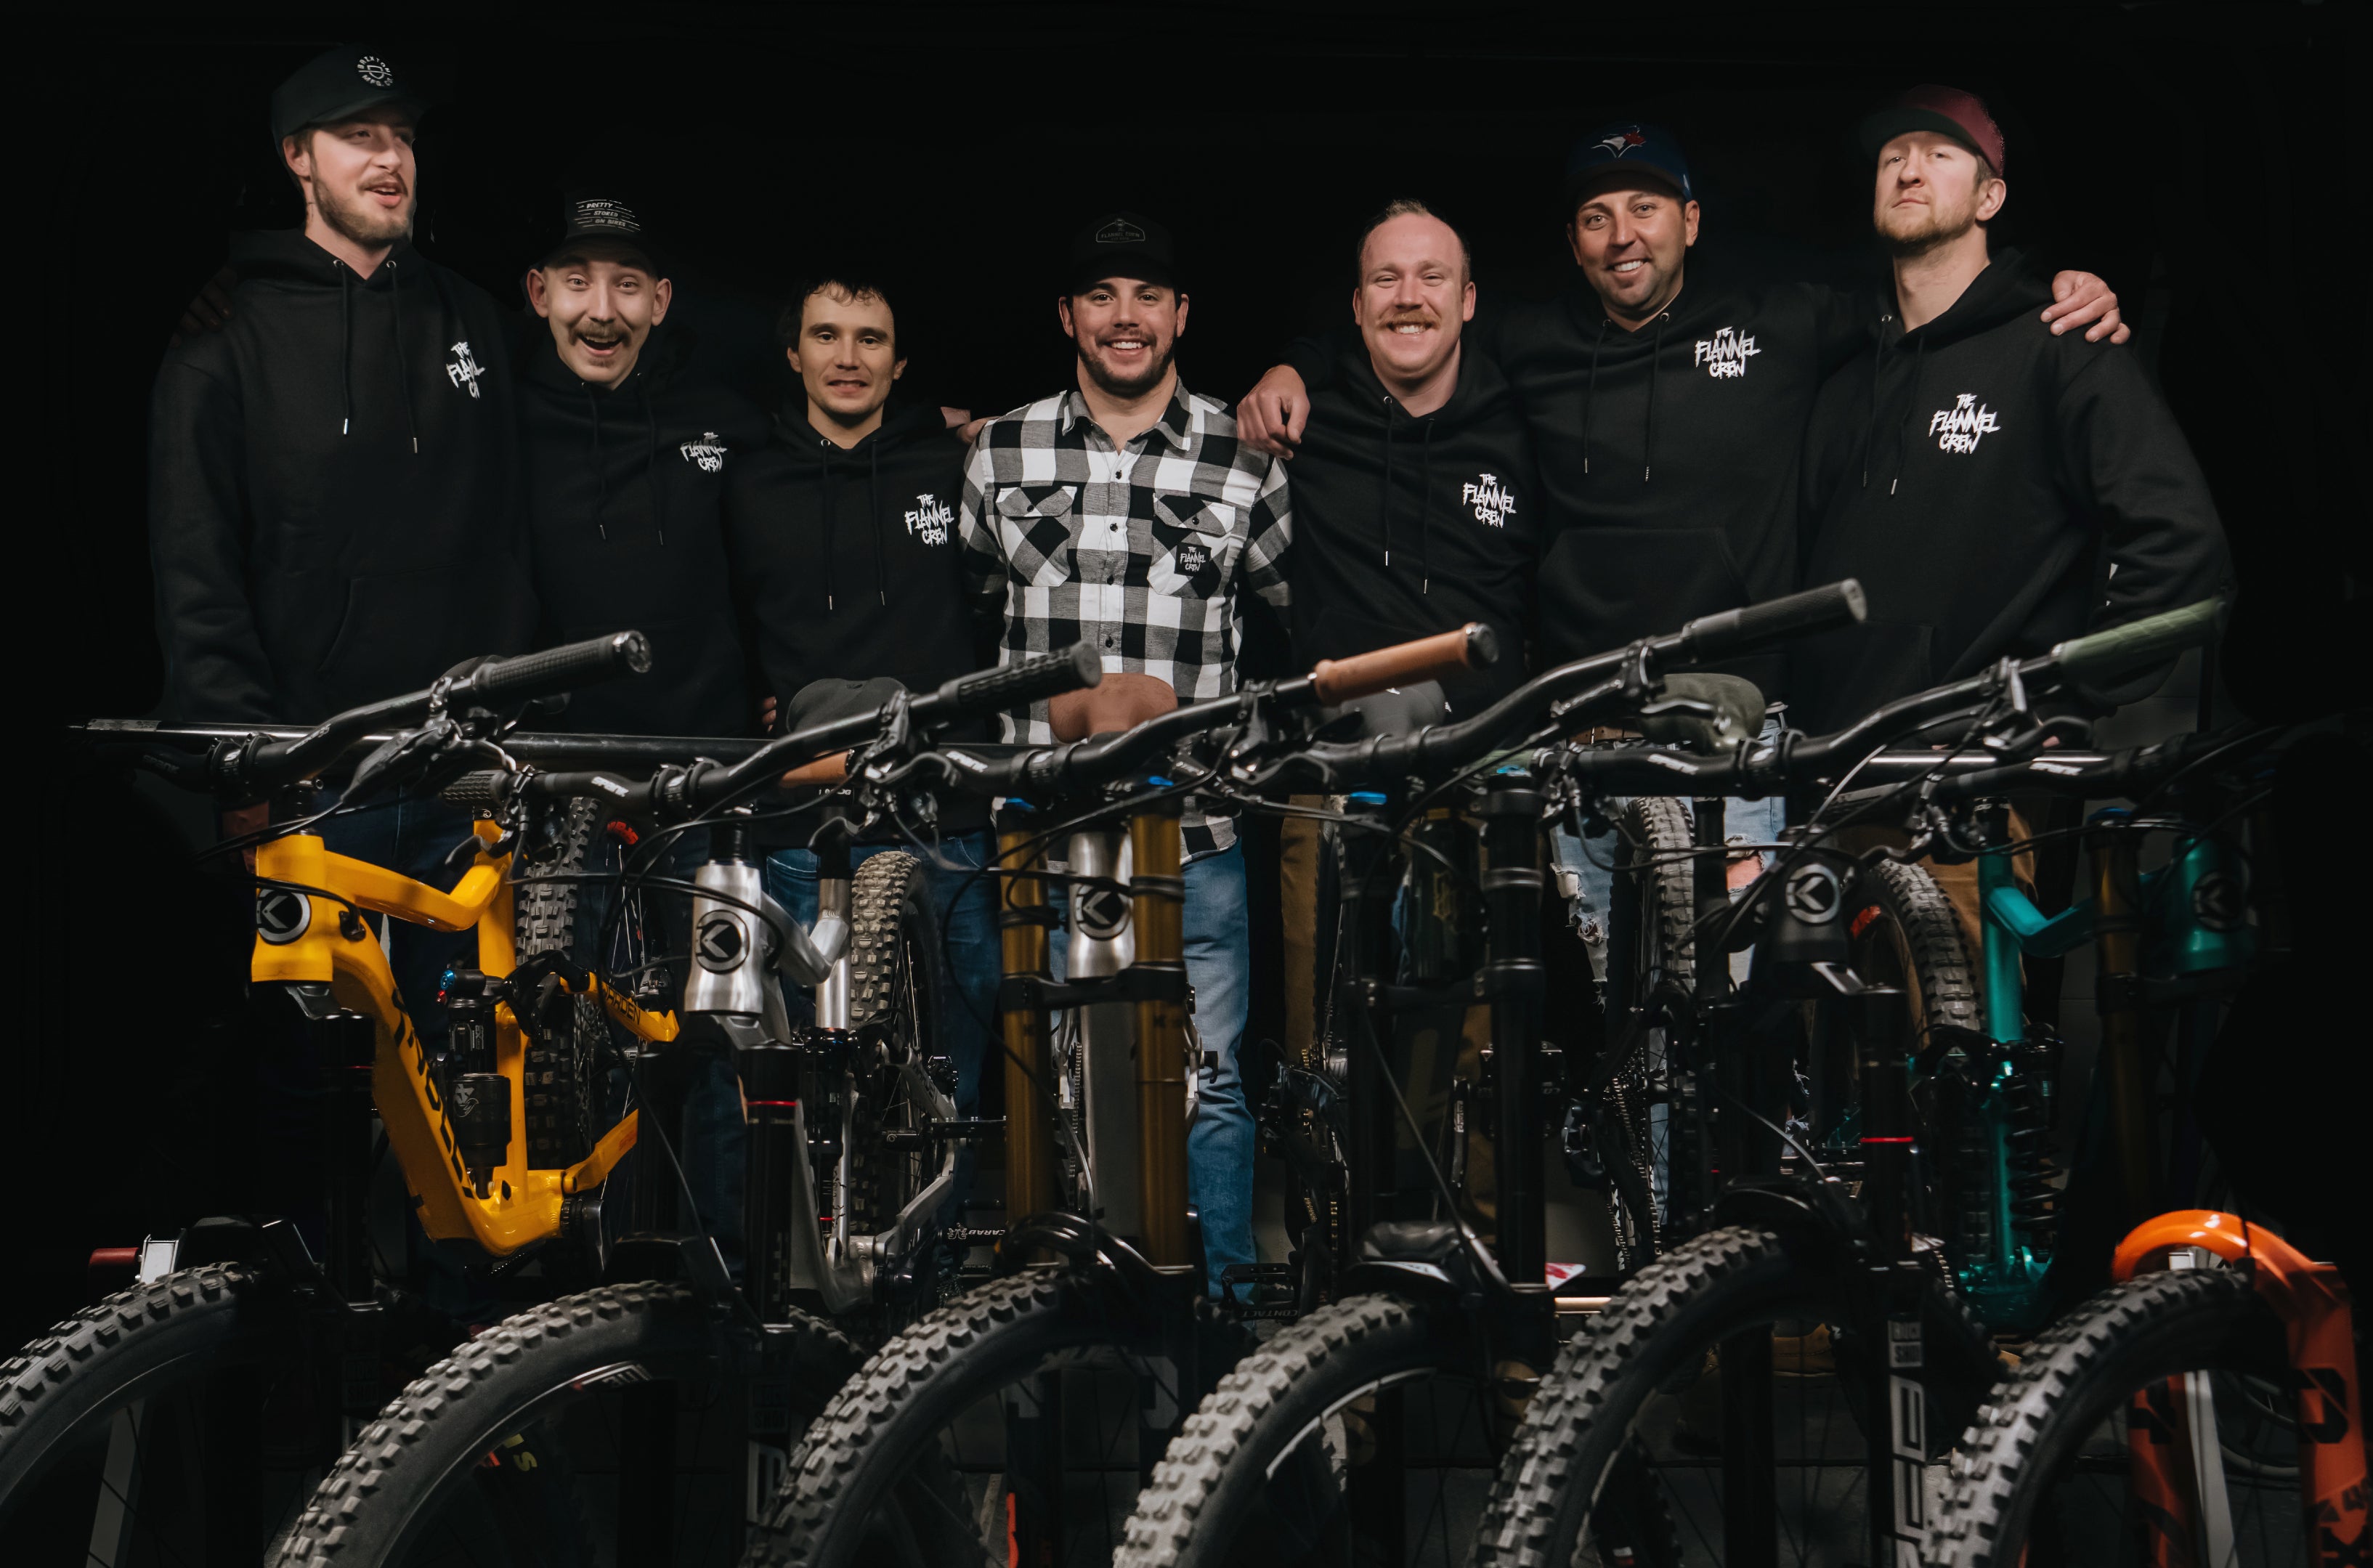 5 Wild Bike Checks from the Flannel Crew